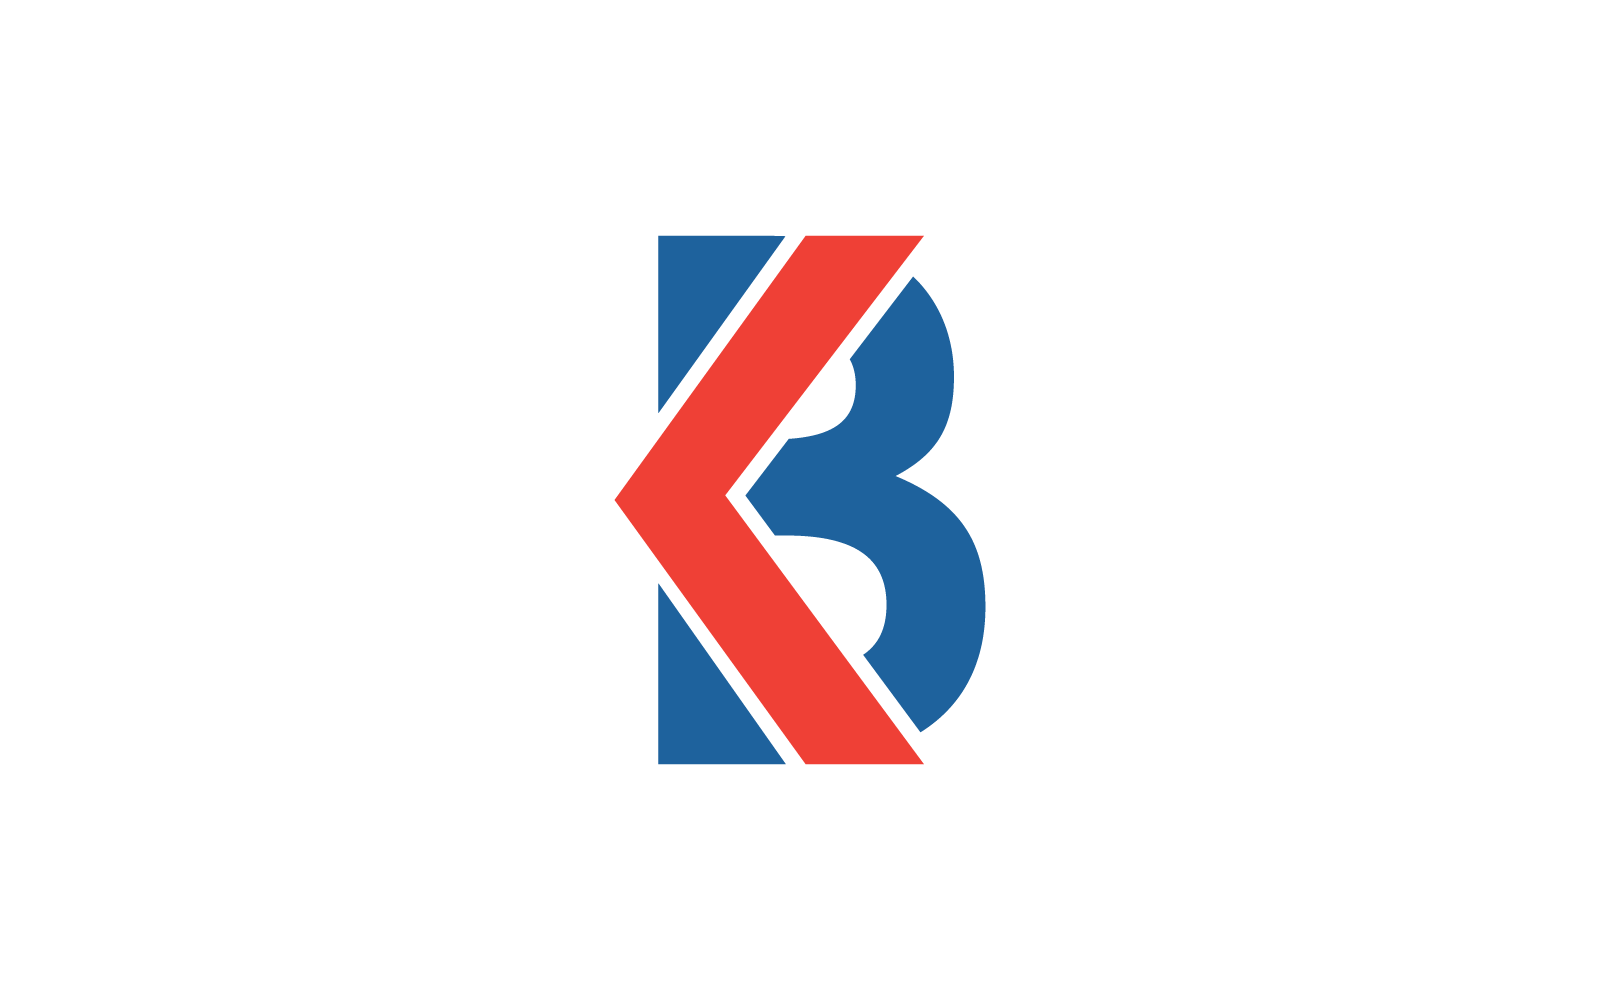 B initiaal met pijl ilustration logo sjabloon